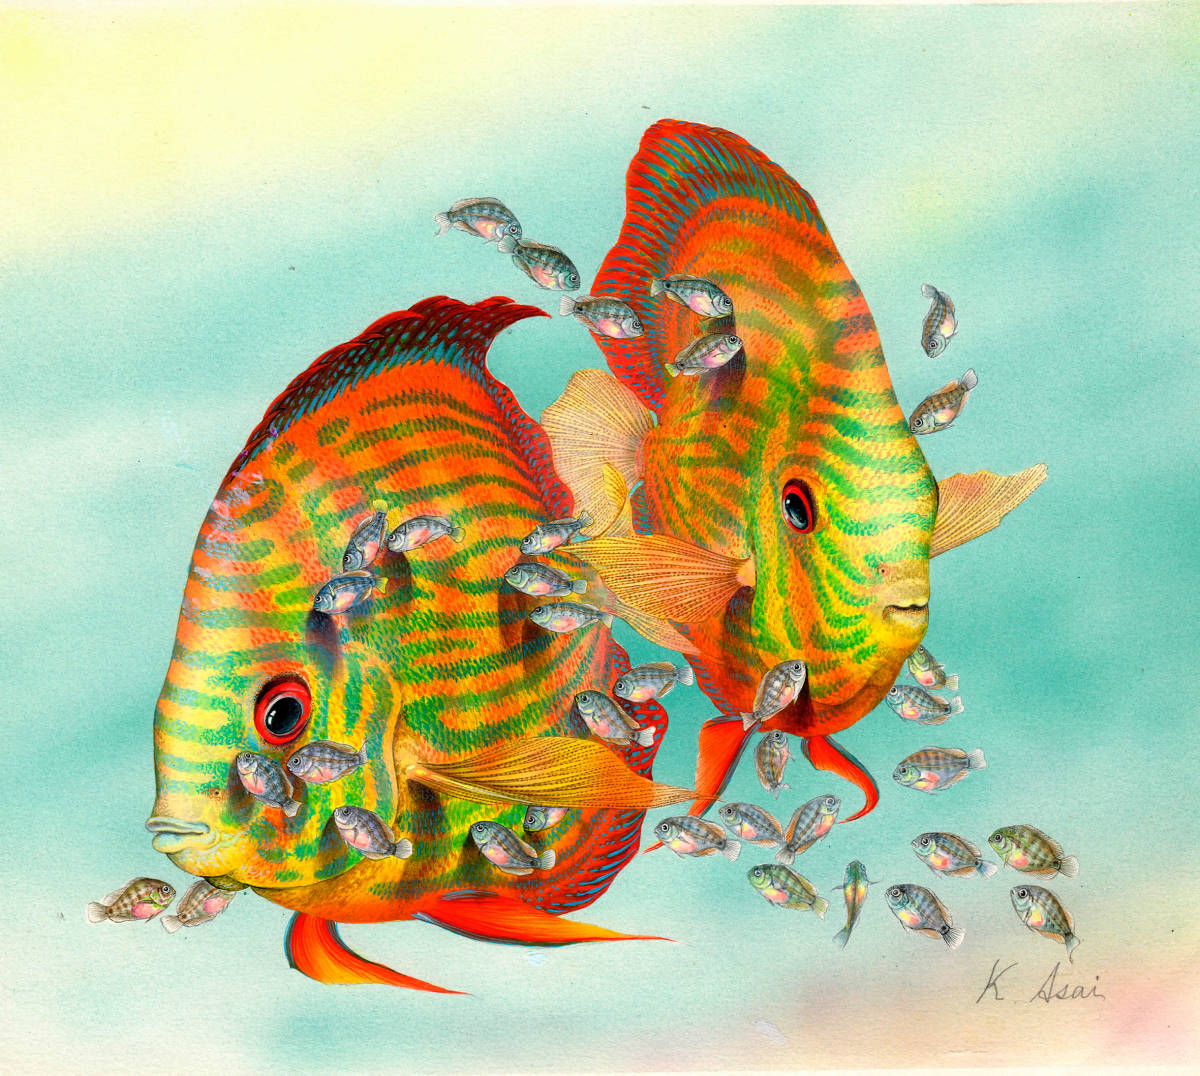 Aquarell Miniatur-Malerei eines Lebewesens Discus Erziehung authentisch, Malerei, Aquarell, Tierbilder